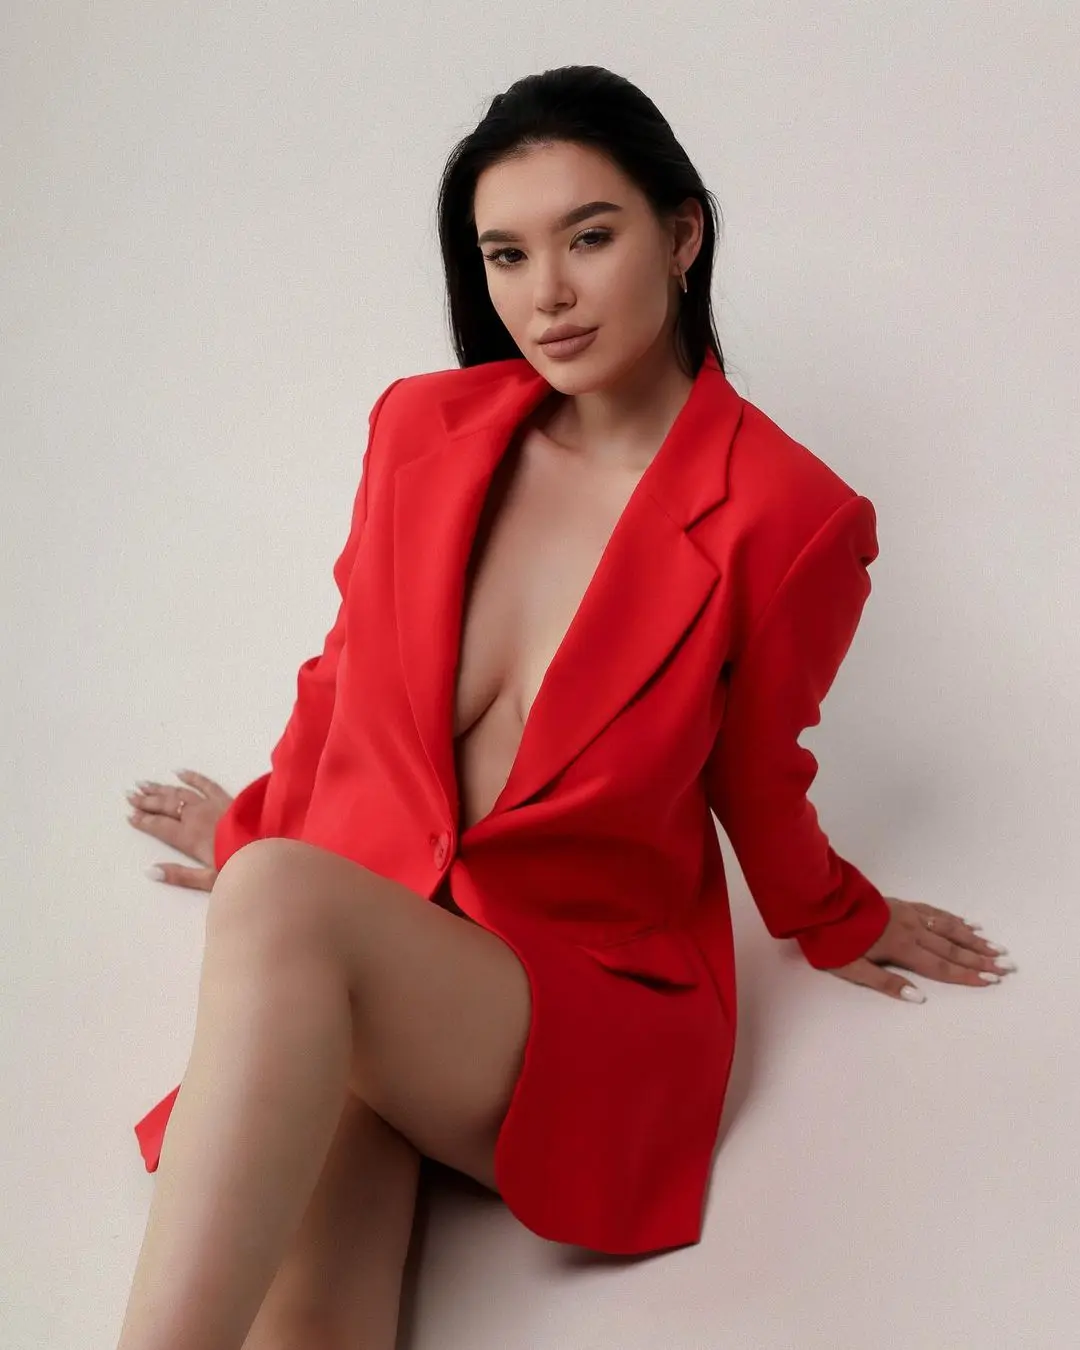 hot Kazakh women